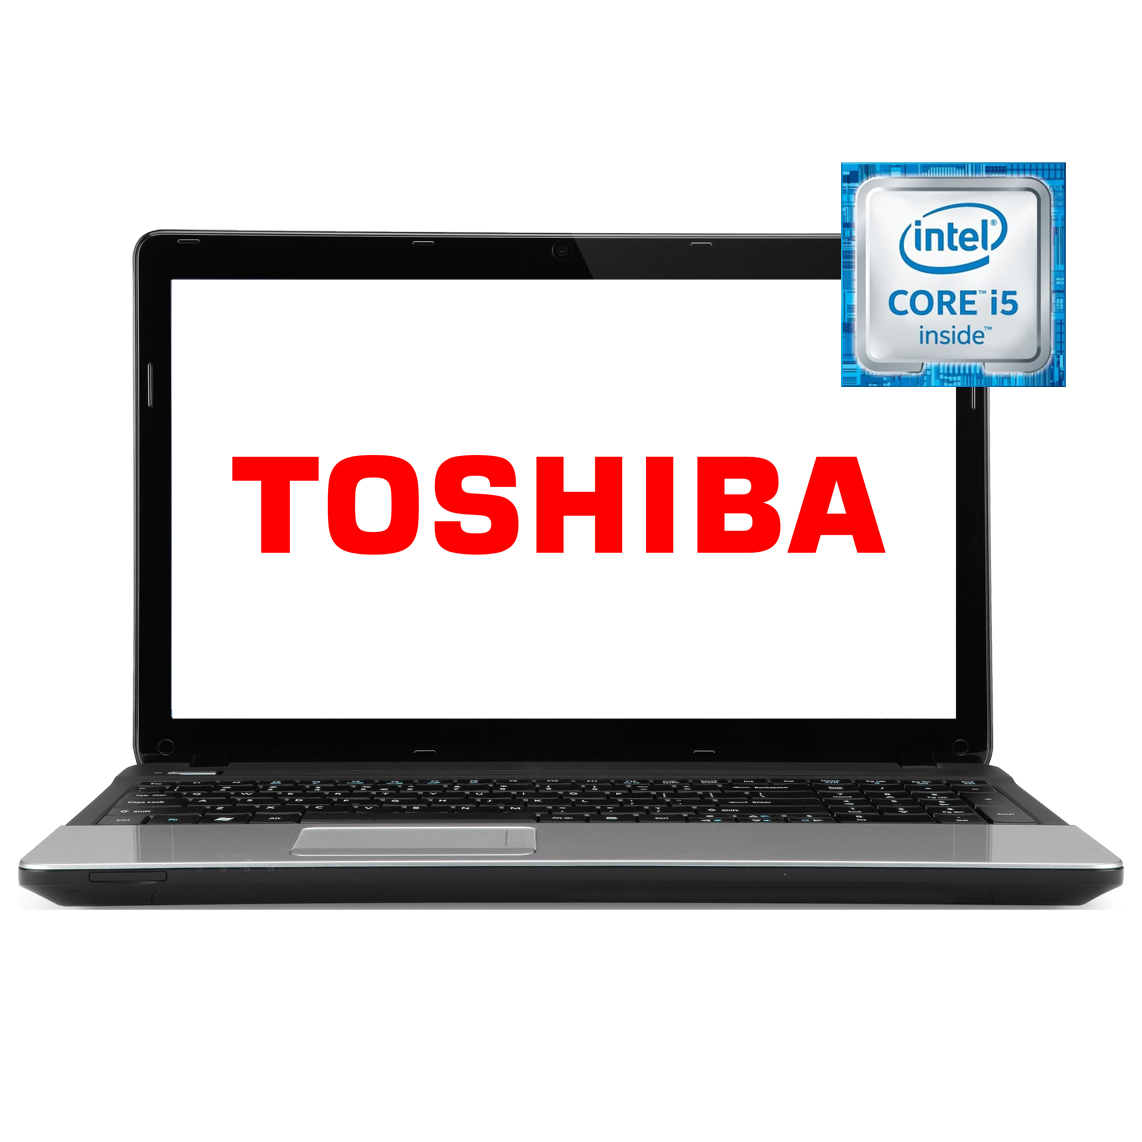 Toshiba - 15.6 inch Core i5 2nd Gen